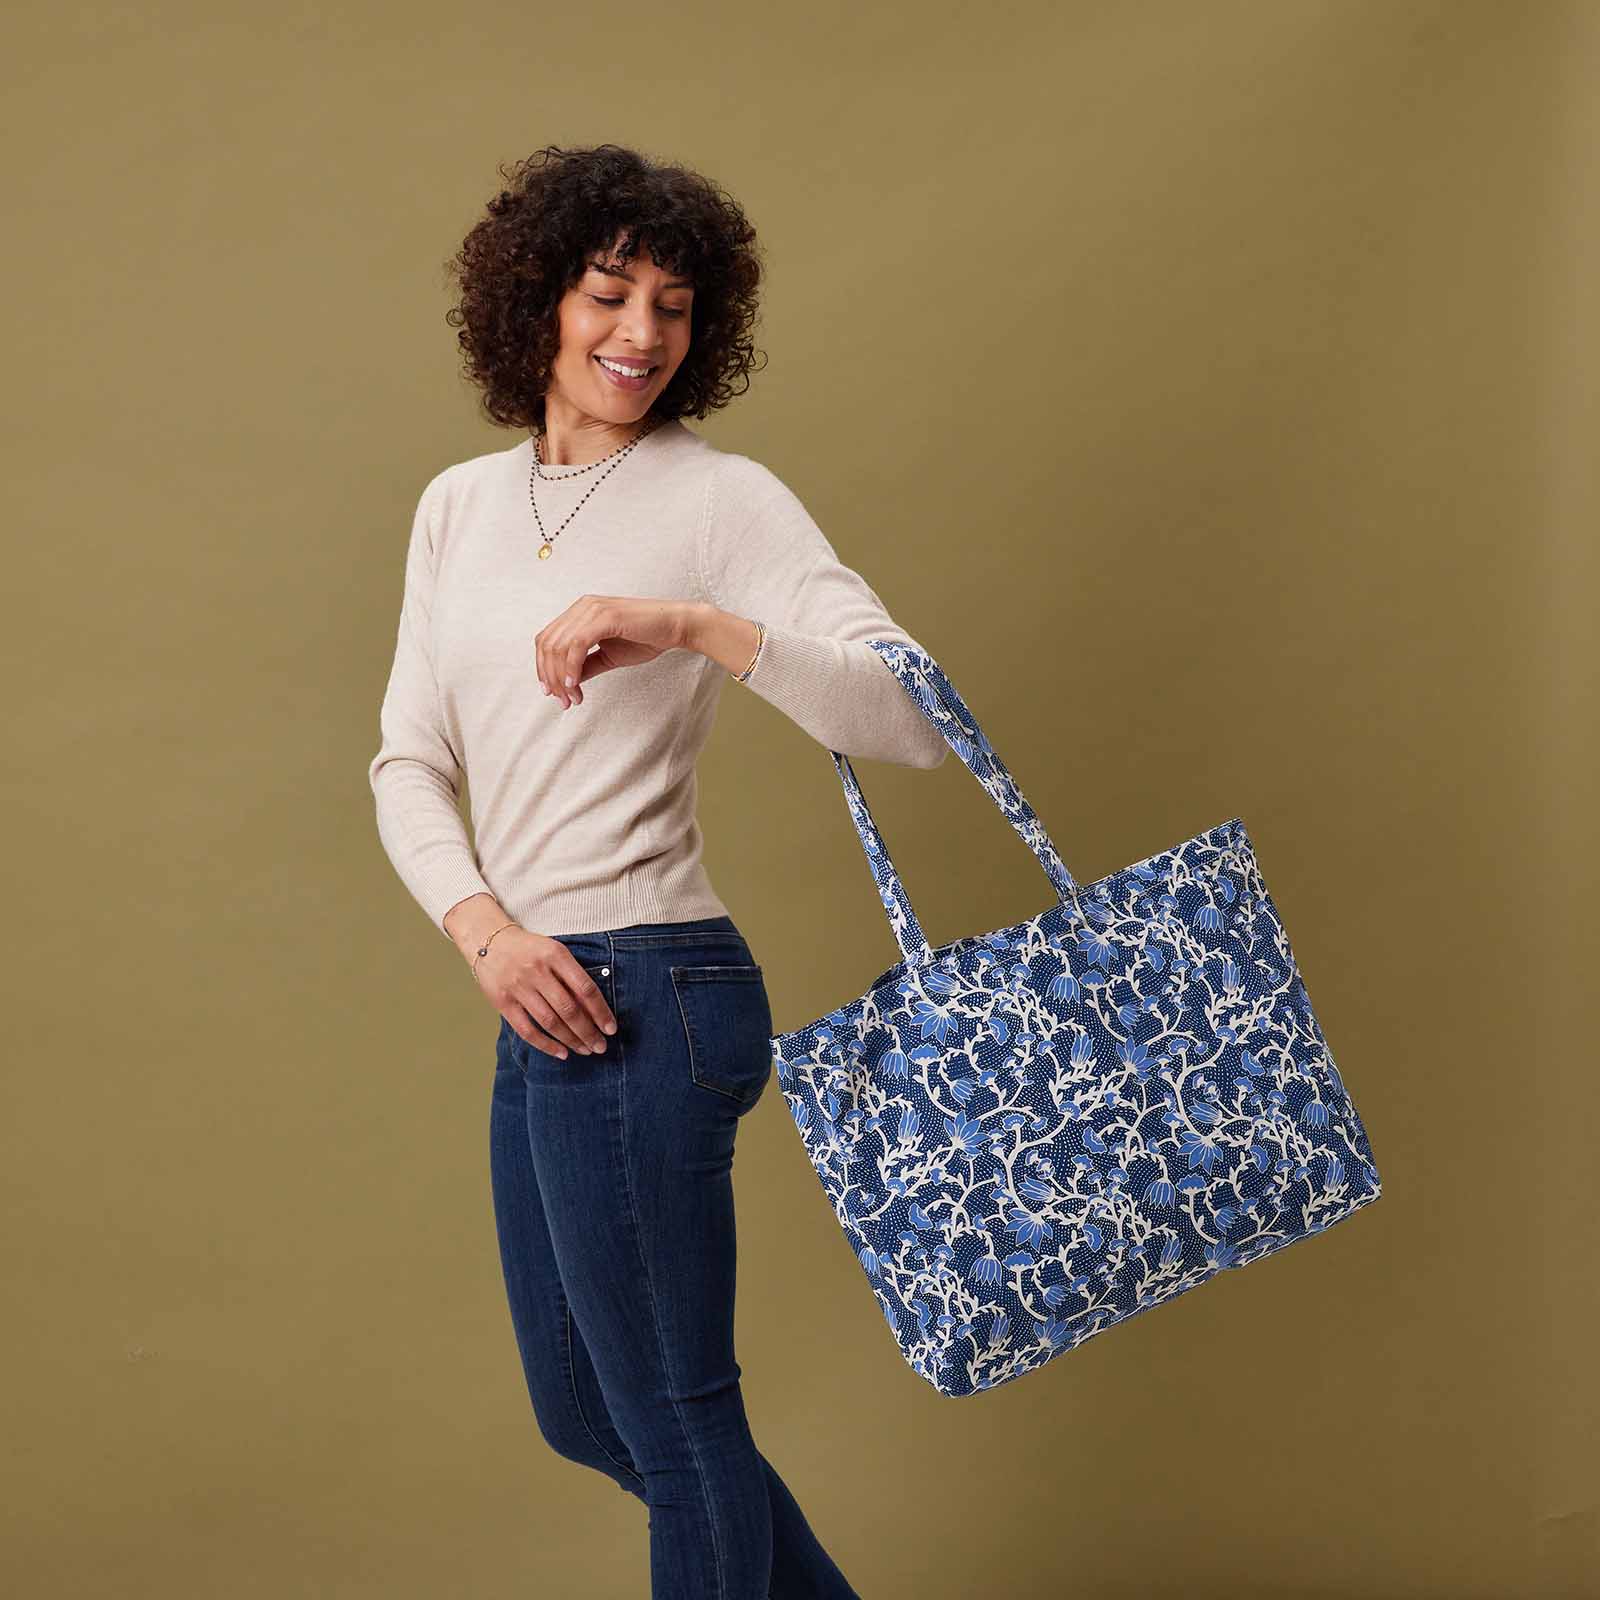 Fleur Little Shopper Tote Bag Tote - rockflowerpaper